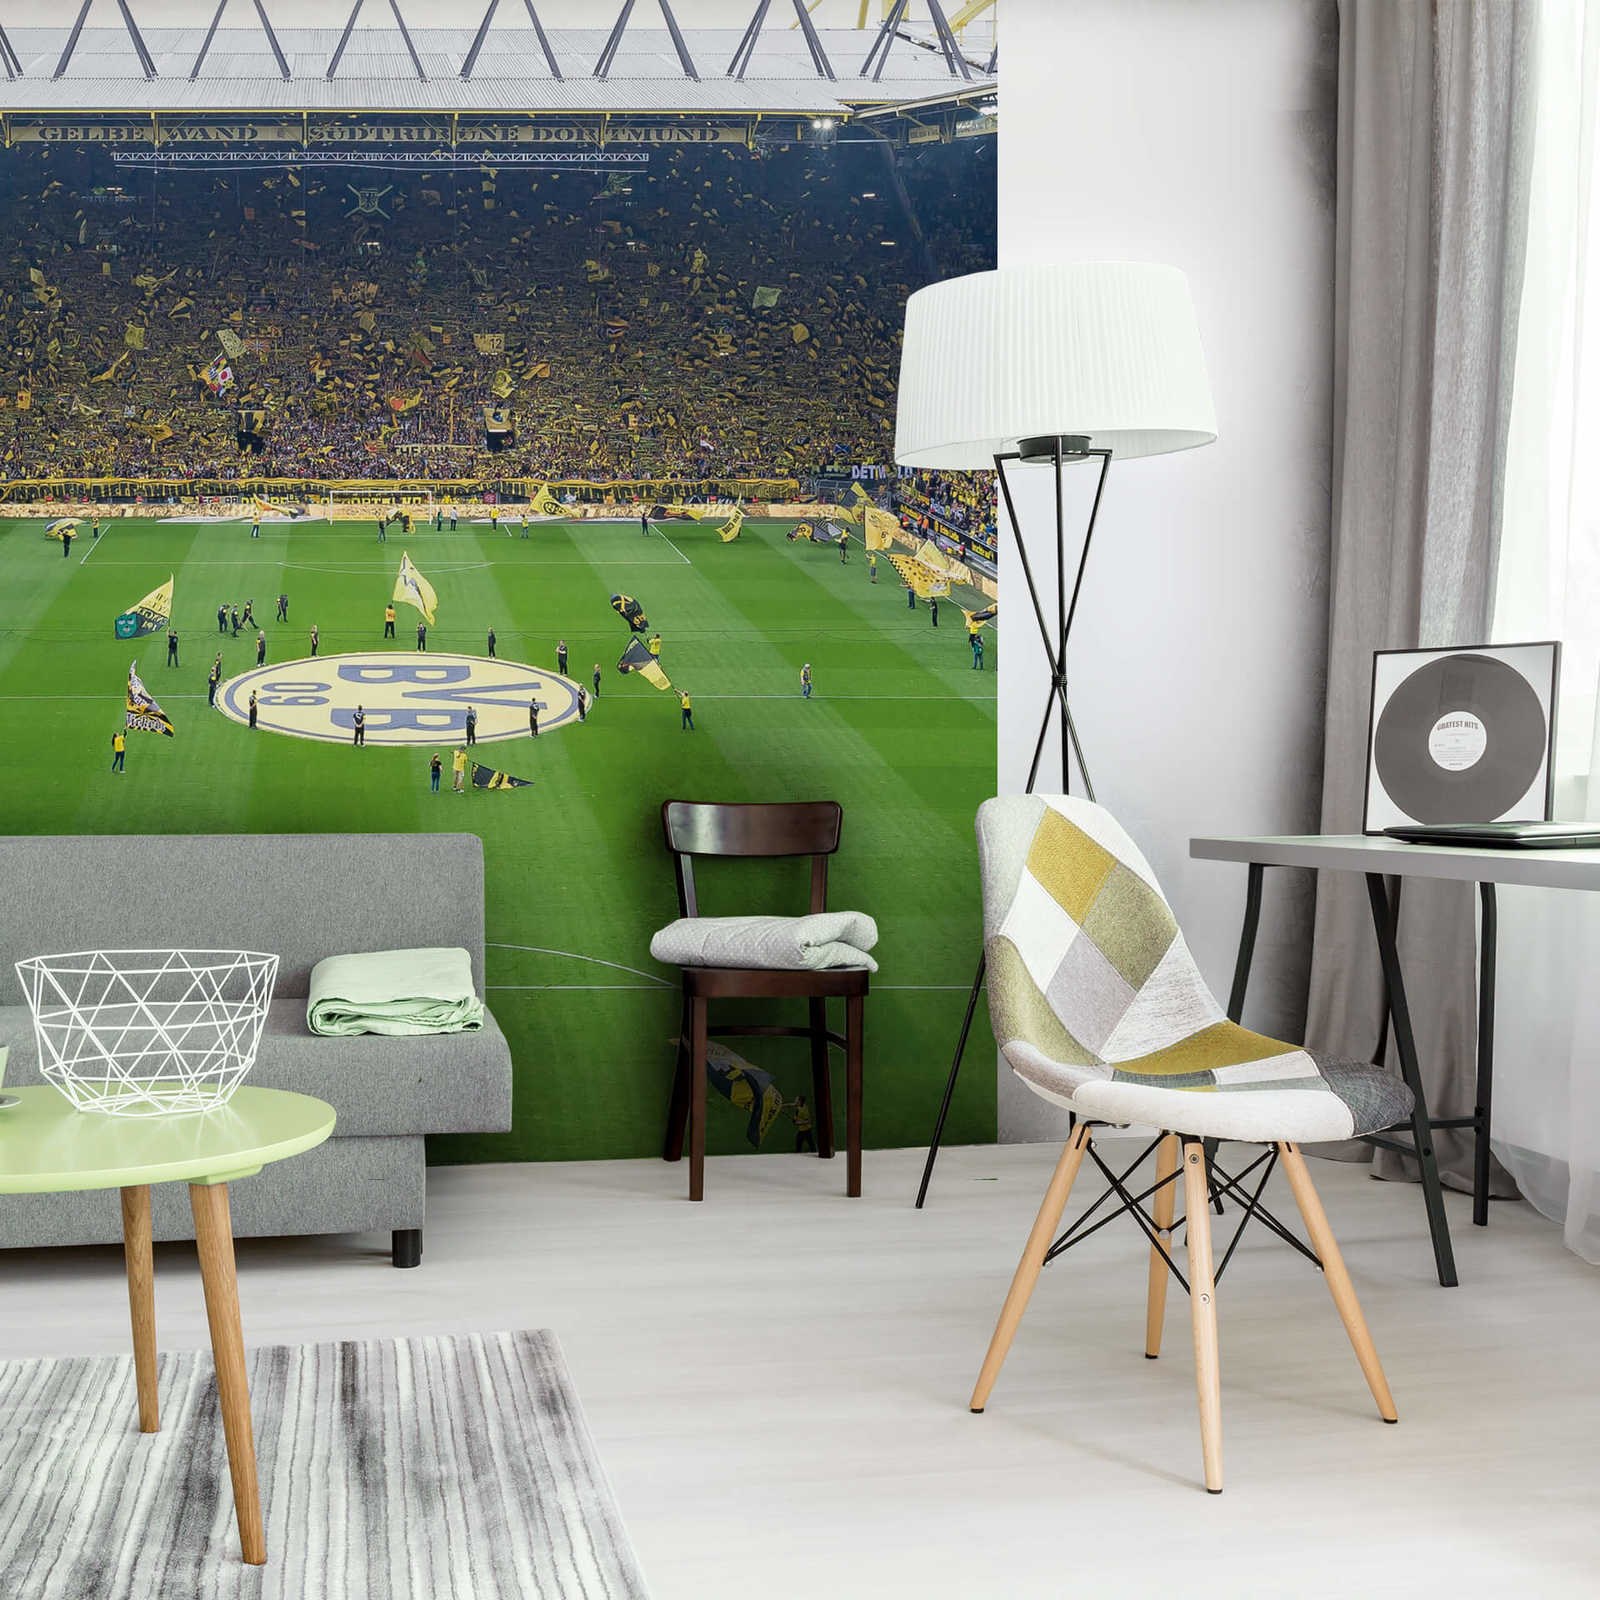             Photo wallpaper BVB stadium with fans, portrait format
        